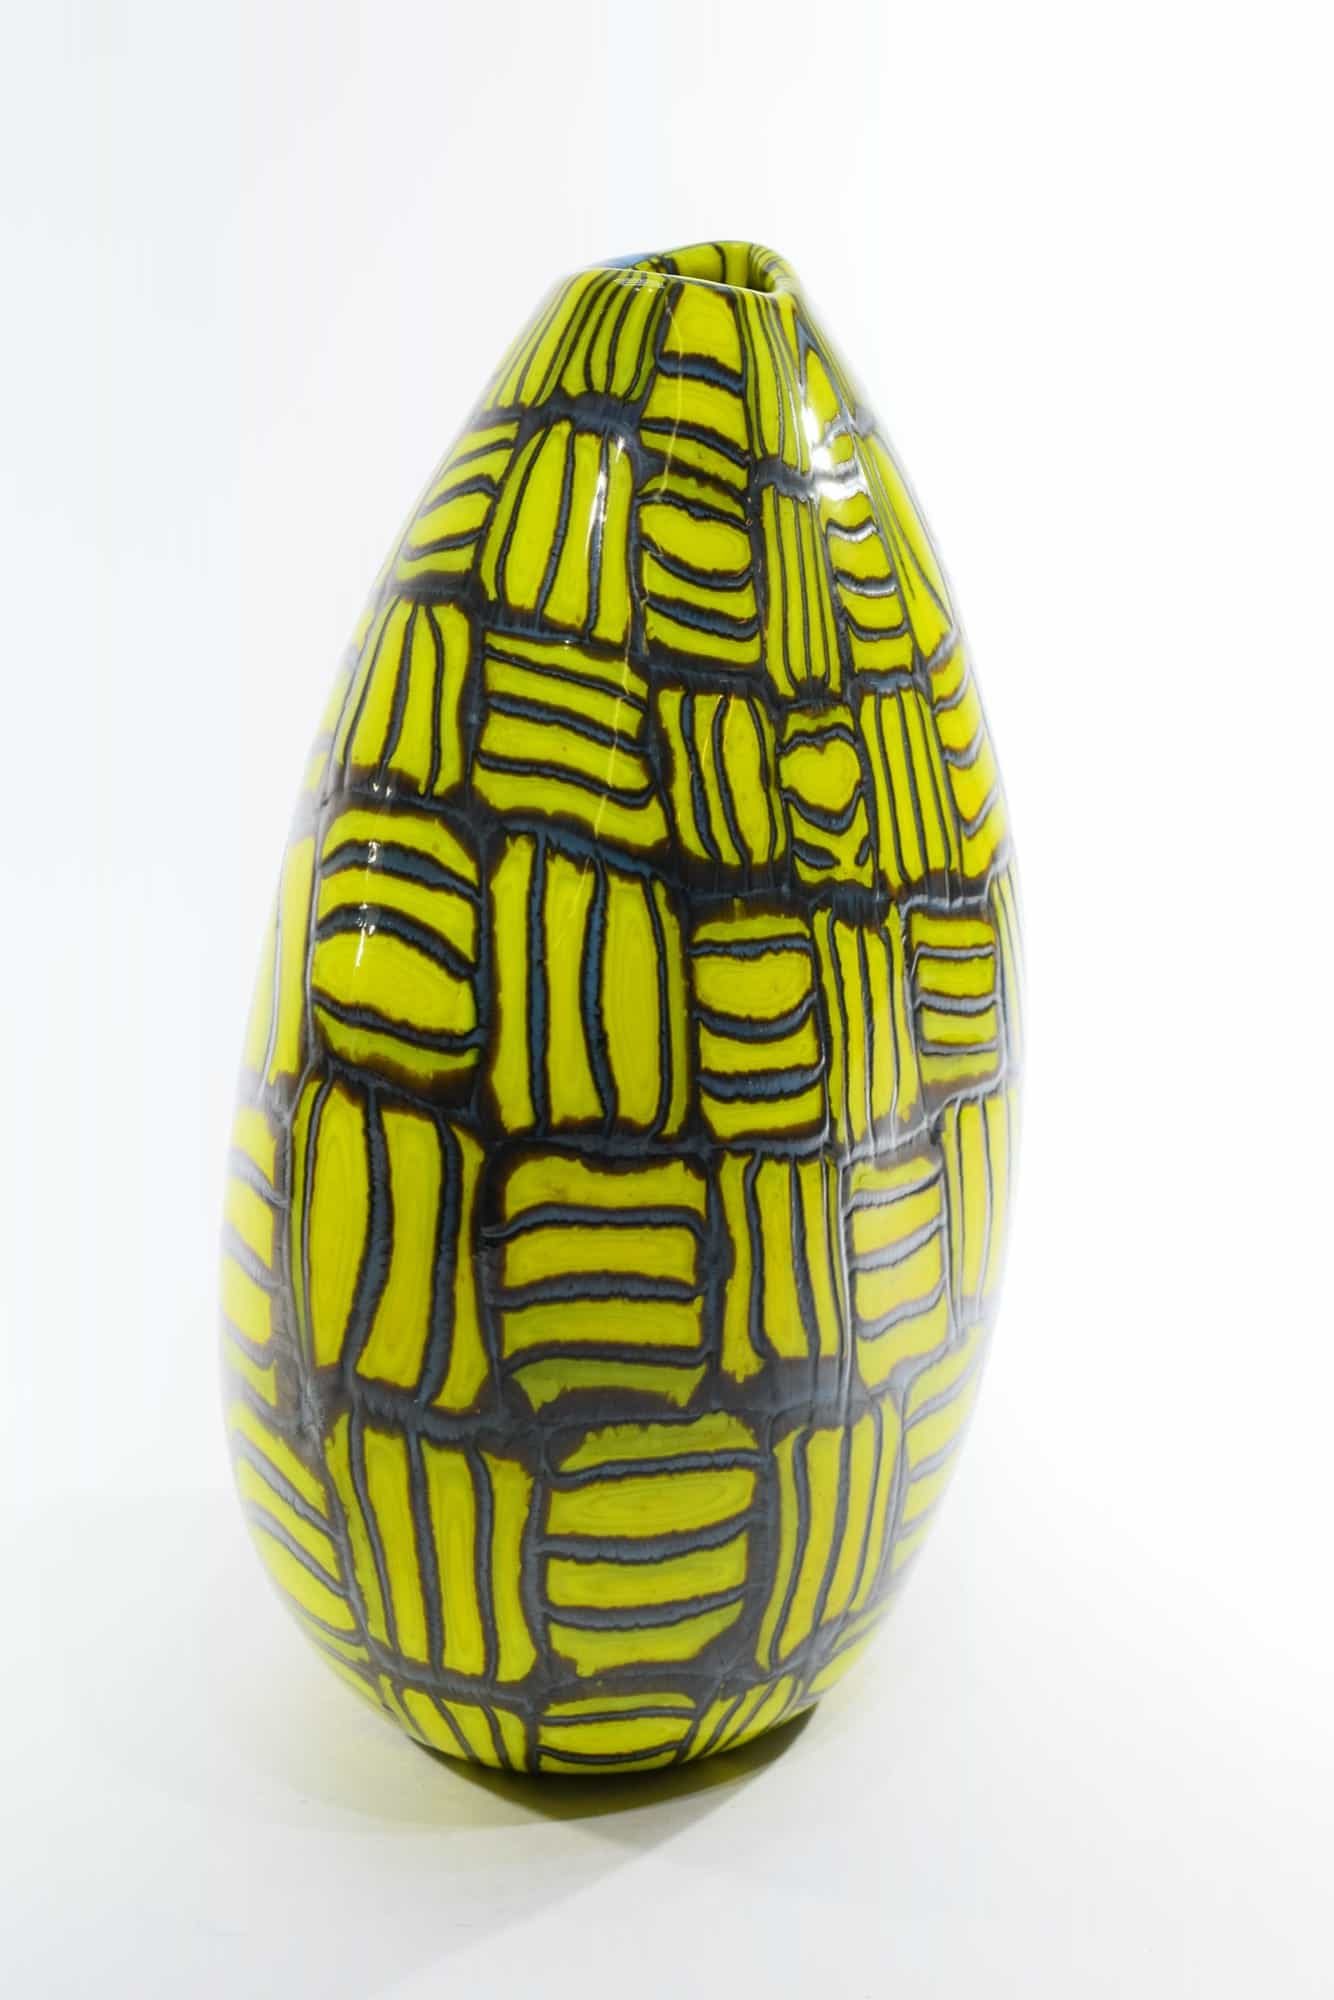 Unique-Vase-Murano-Glas-15026